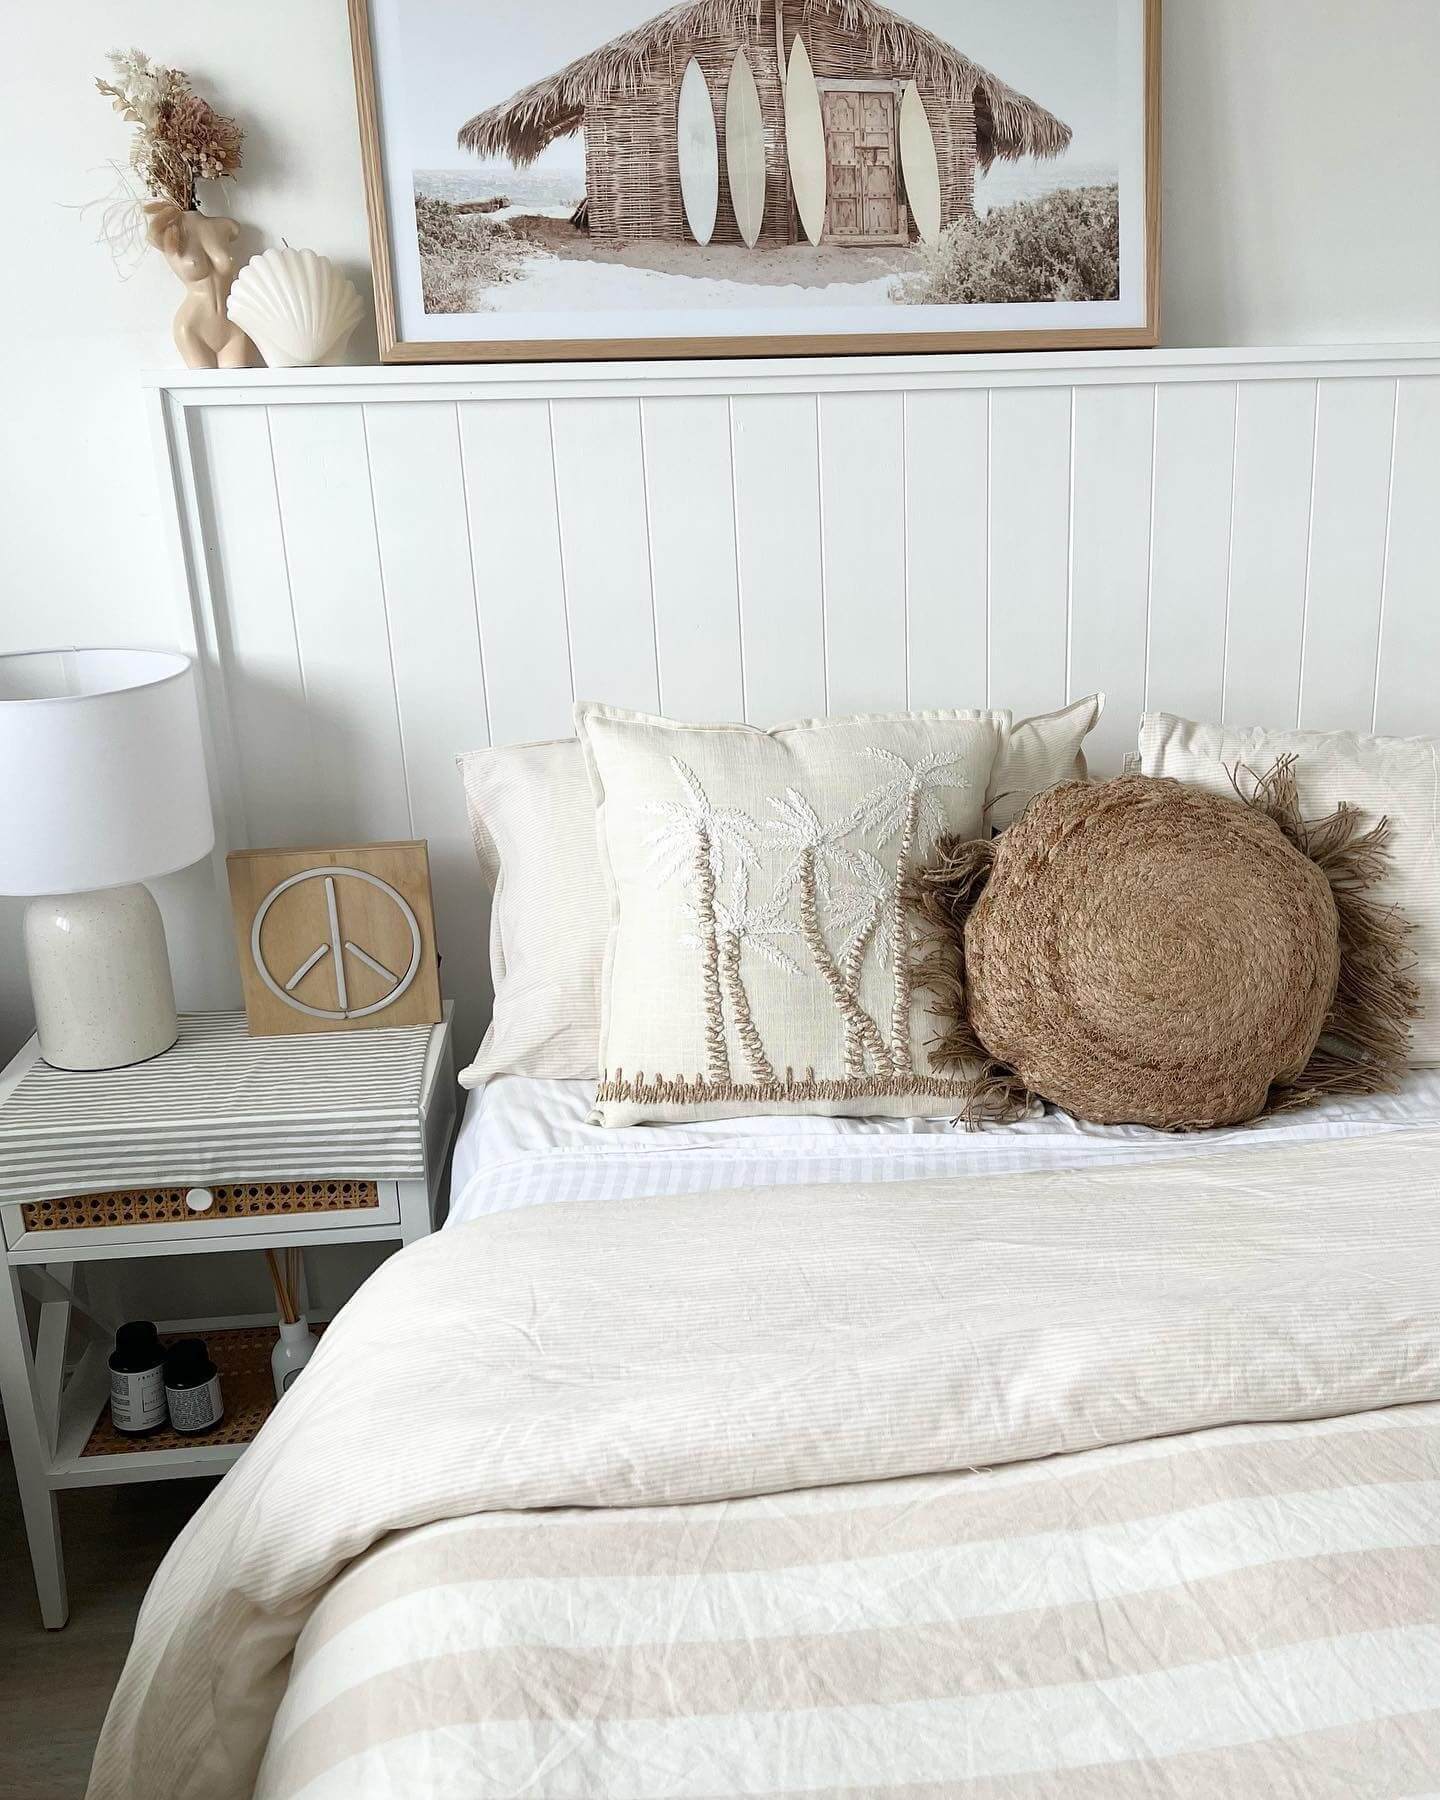 Accommodation bedroom cream, white and tan coastal theme